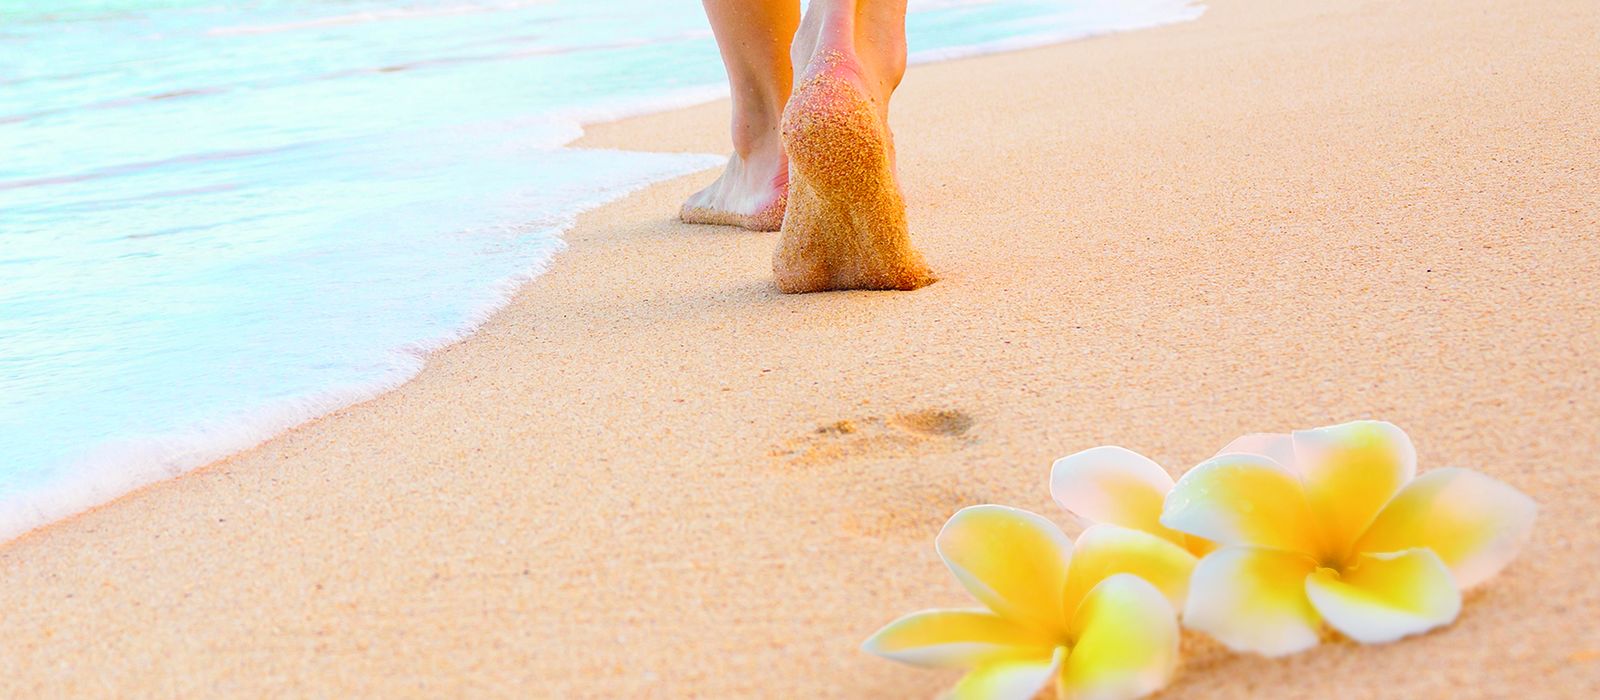 BarfuÃŸ Ã¼ber einen Strand auf Hawaii